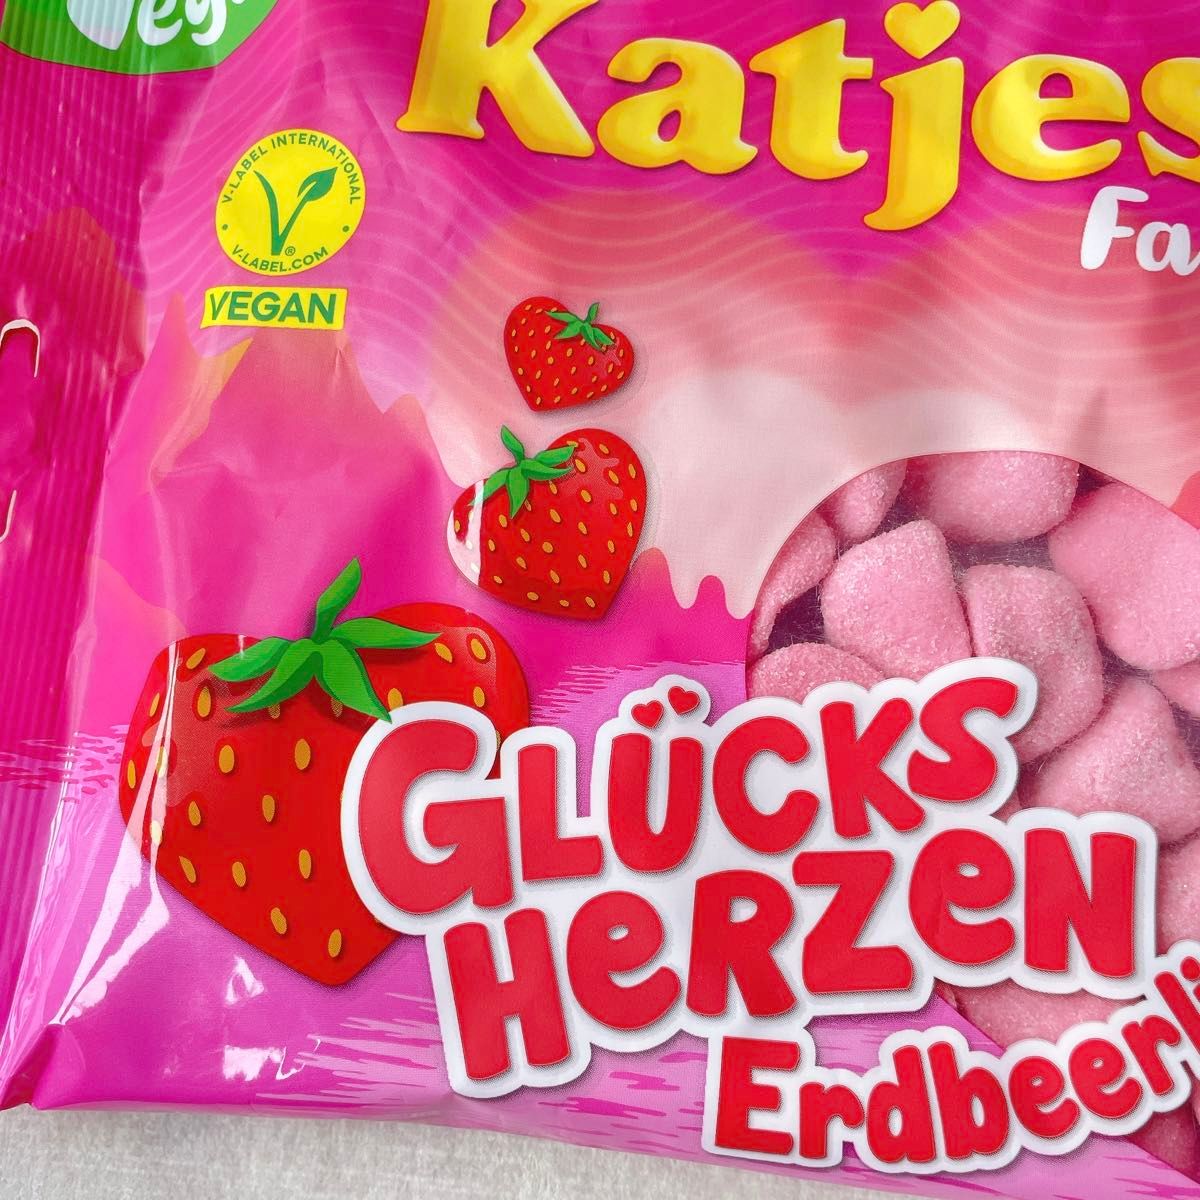 Katjes【日本未販売】Glcksherzen Erdbeerliebe カッチェス　ぷにぷに　グミ